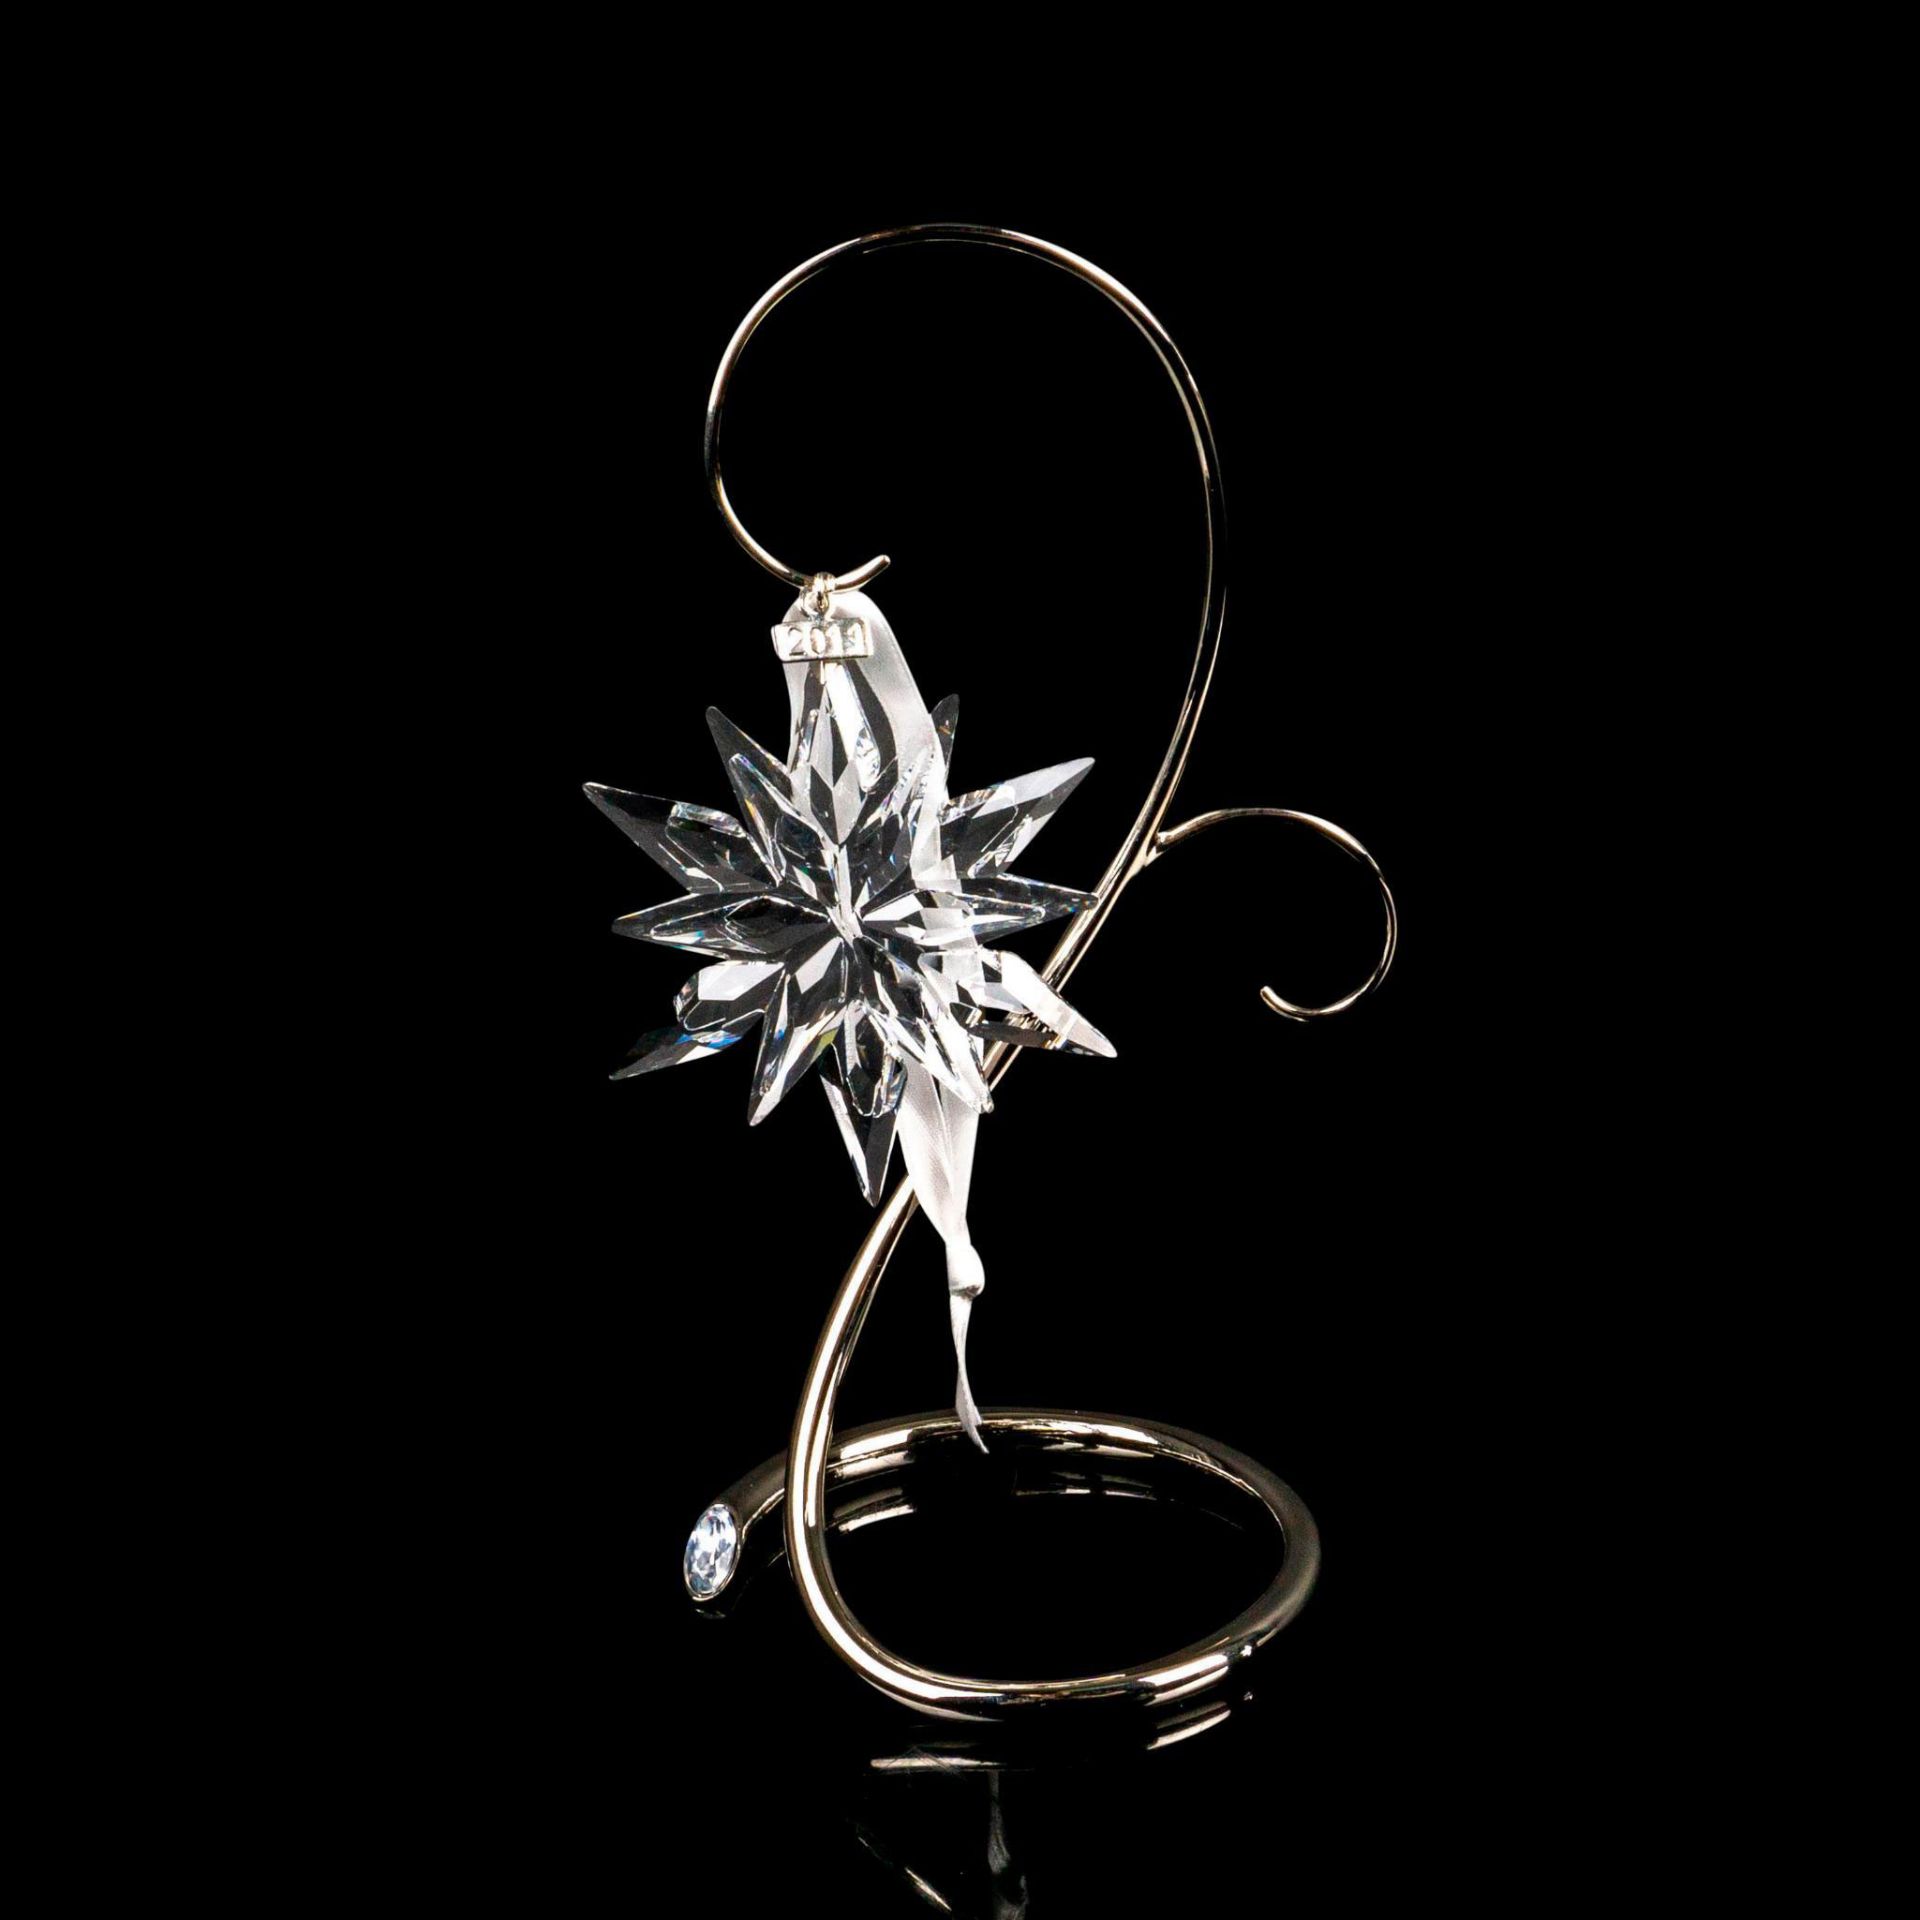 Swarovski Crystal Christmas Ornament 2011 with Stand